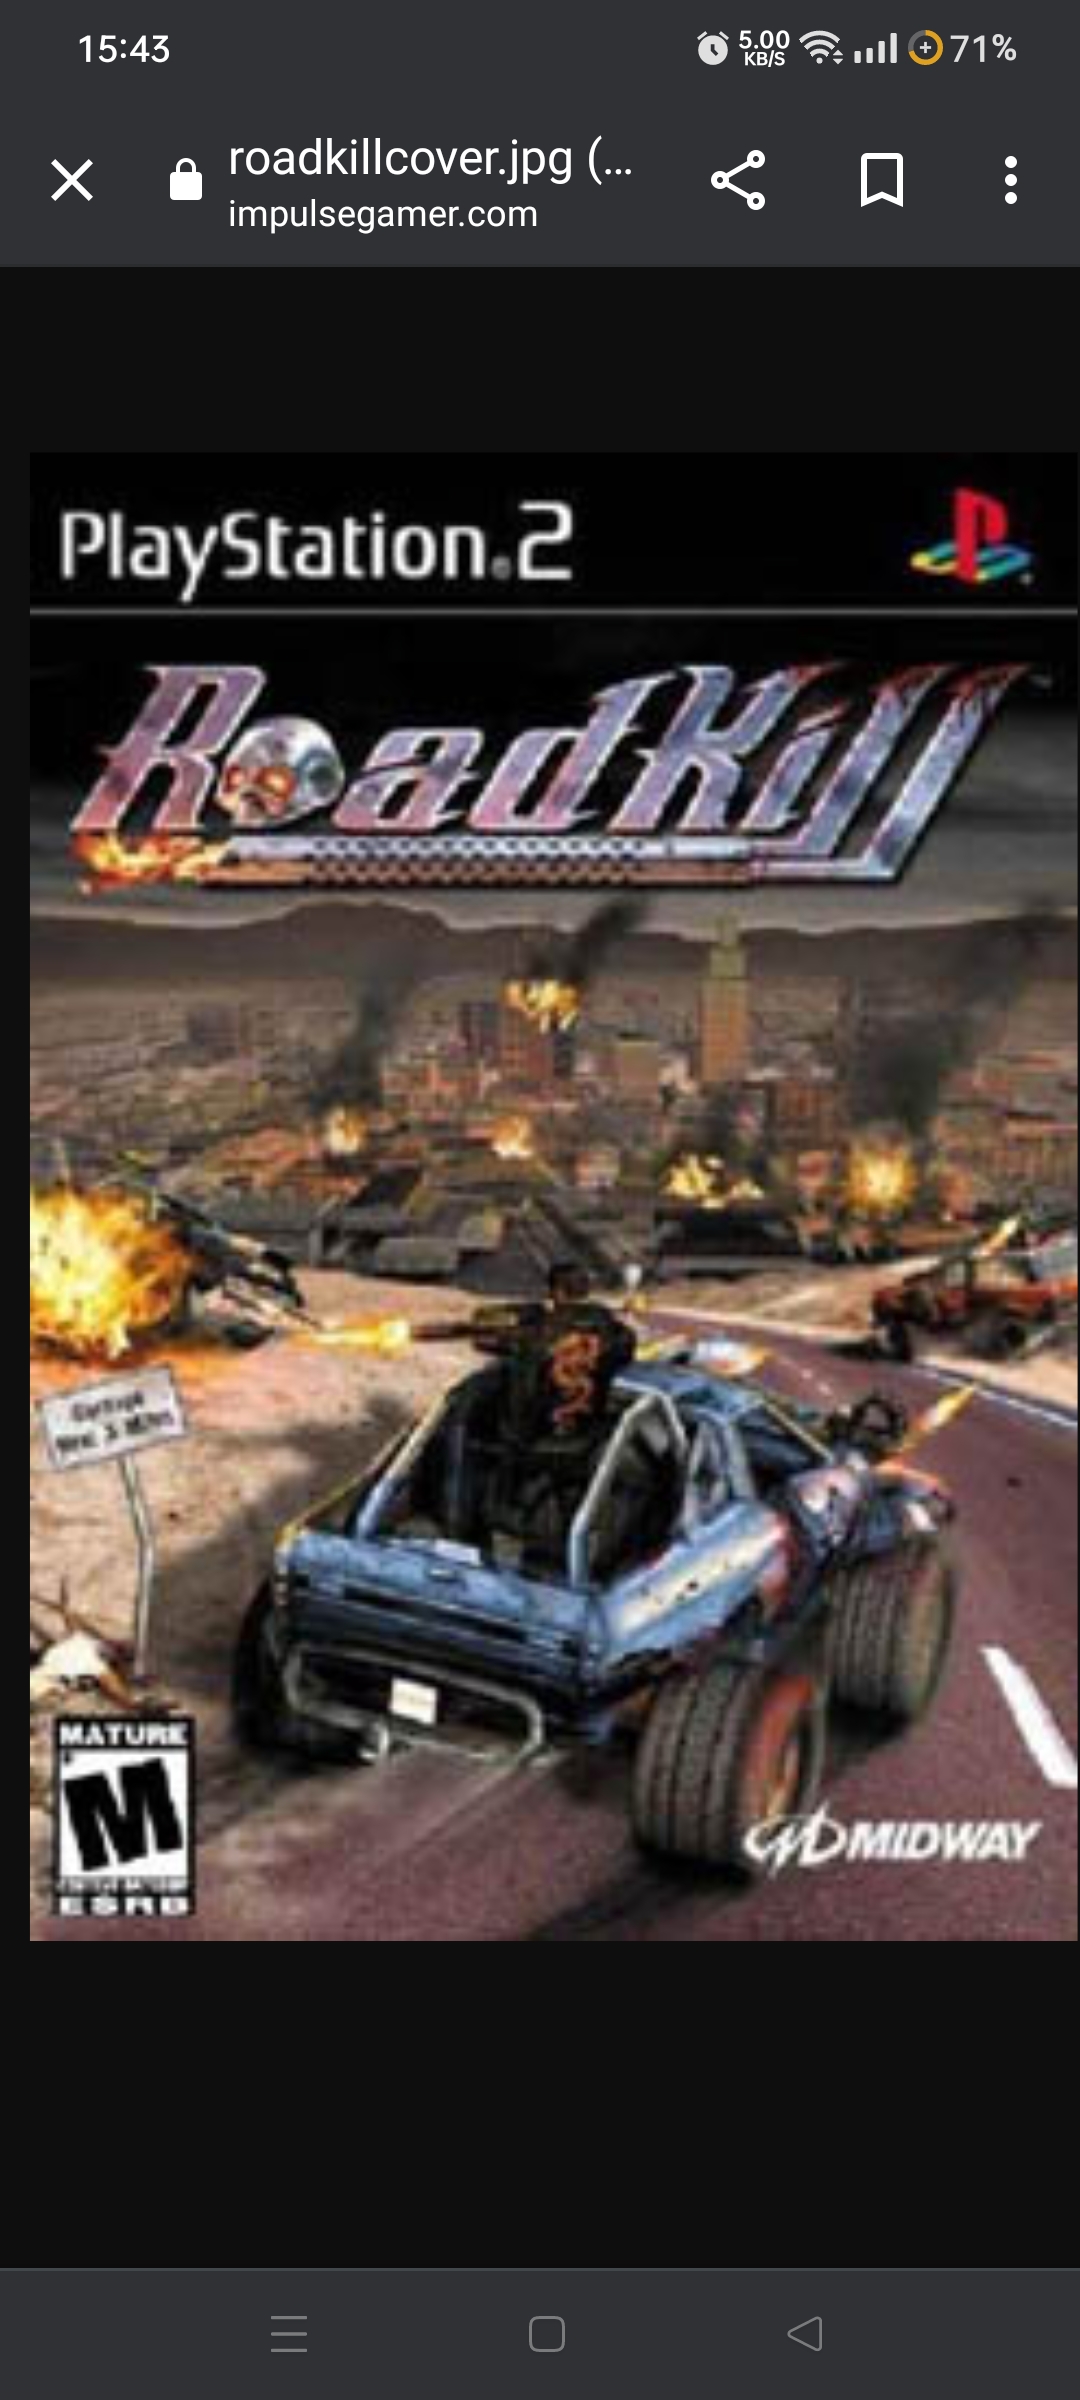 [HCM]Game PS2 roadkill